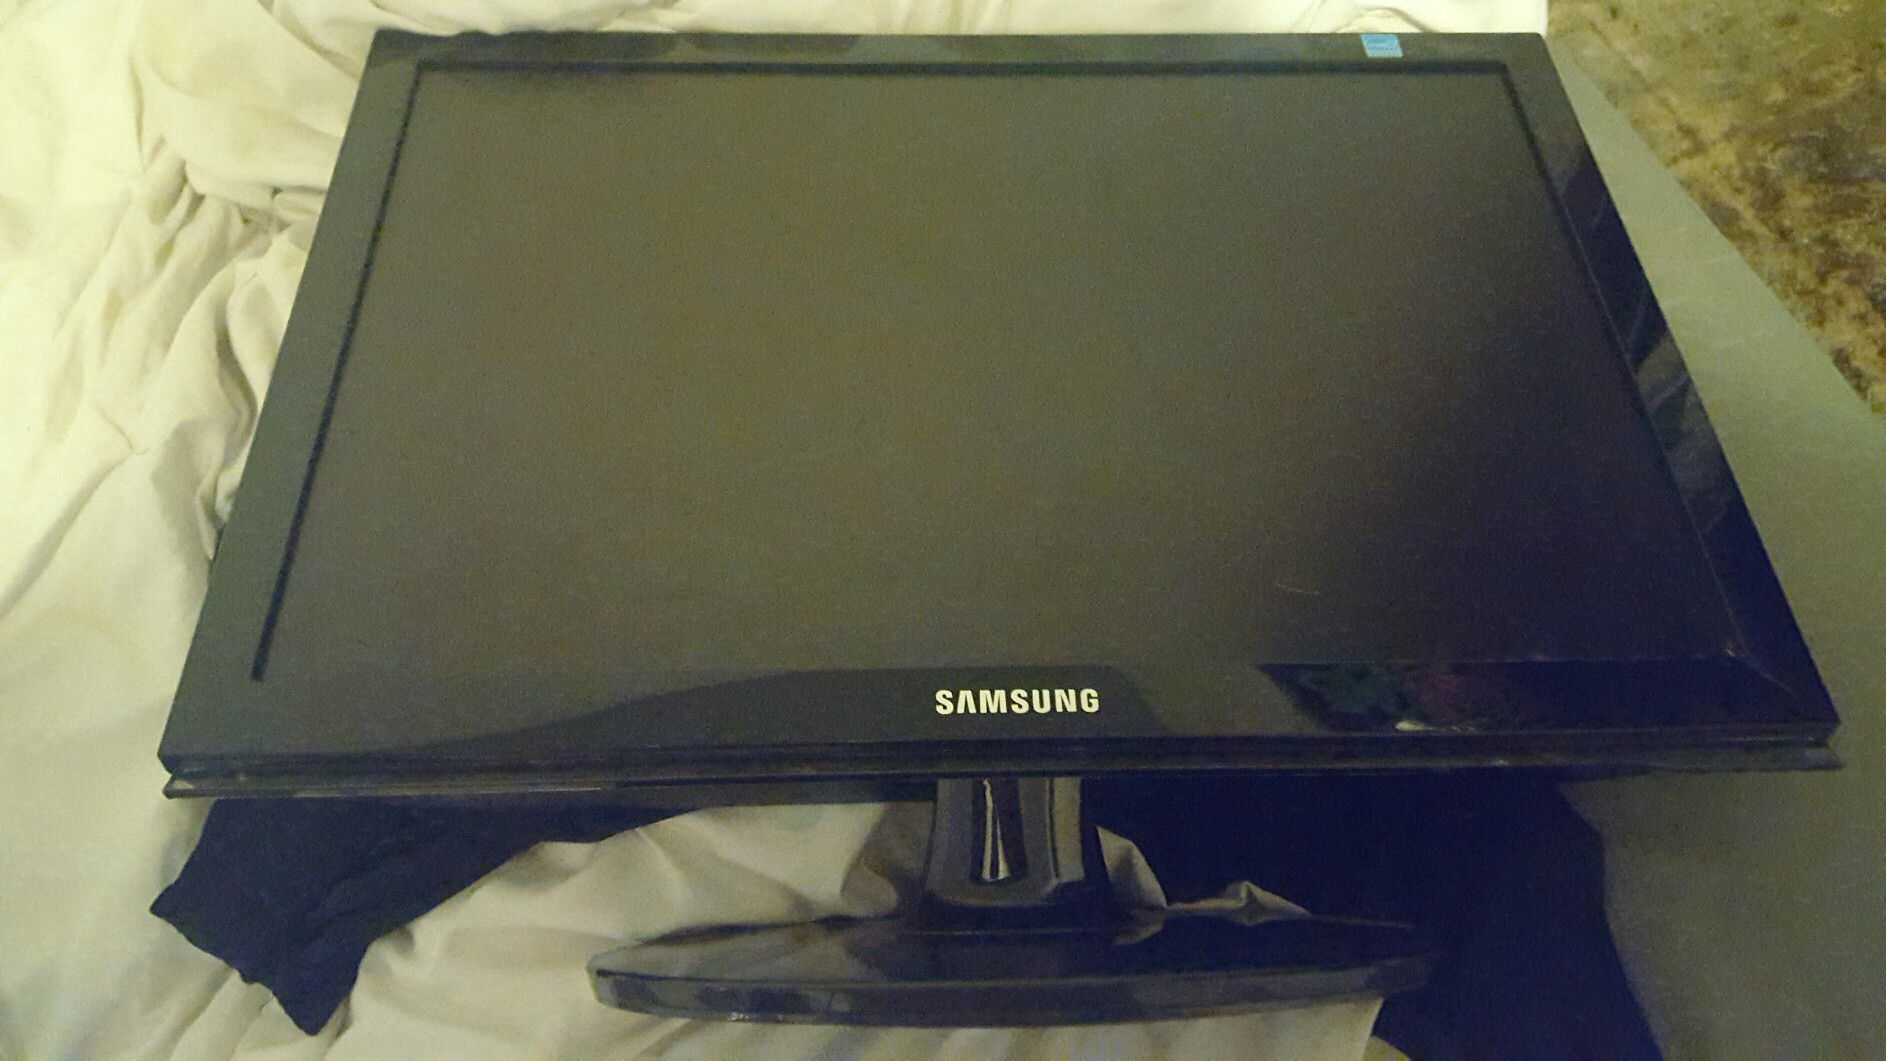 Samsung 22" widescreen monitor